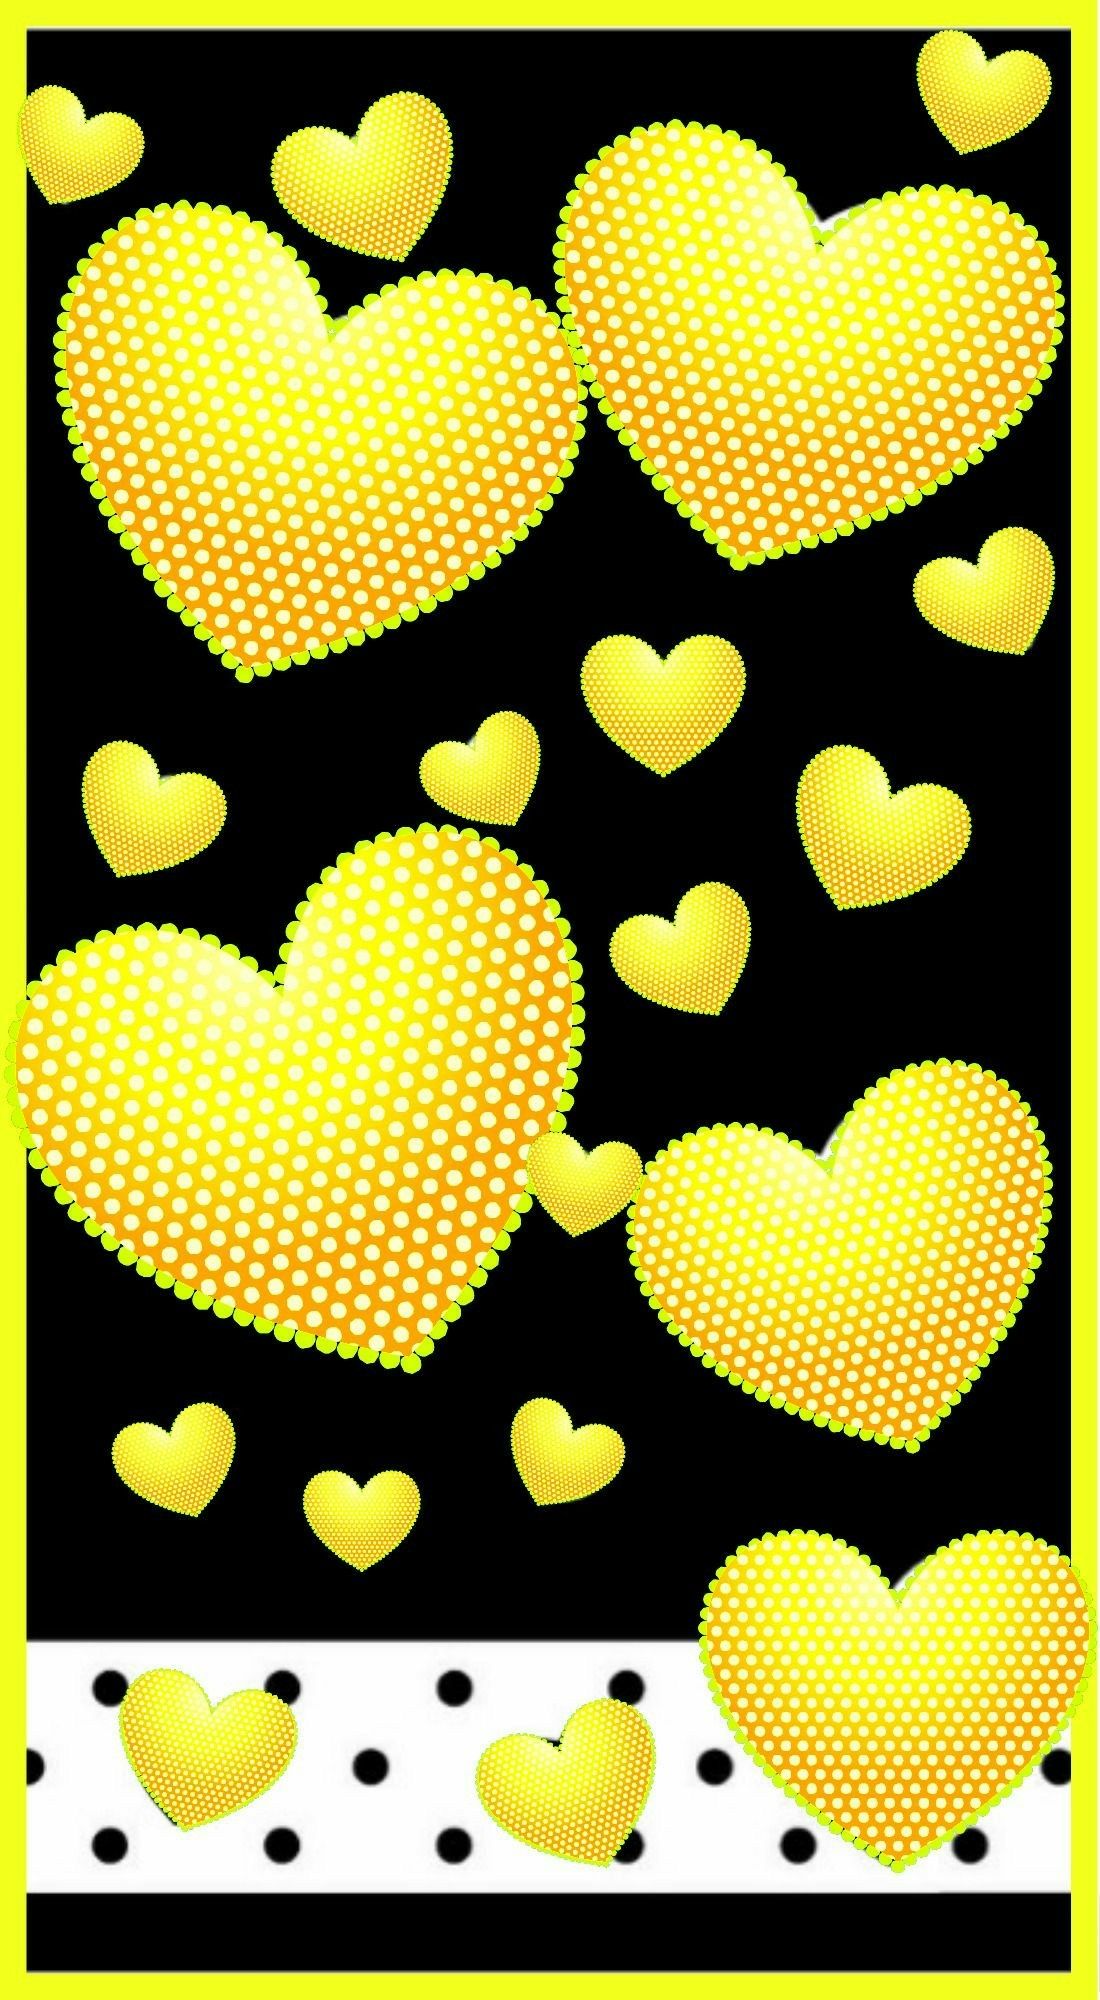 Yellow hearts wallpaper. ハートの壁紙, 壁紙 花, ハート 柄